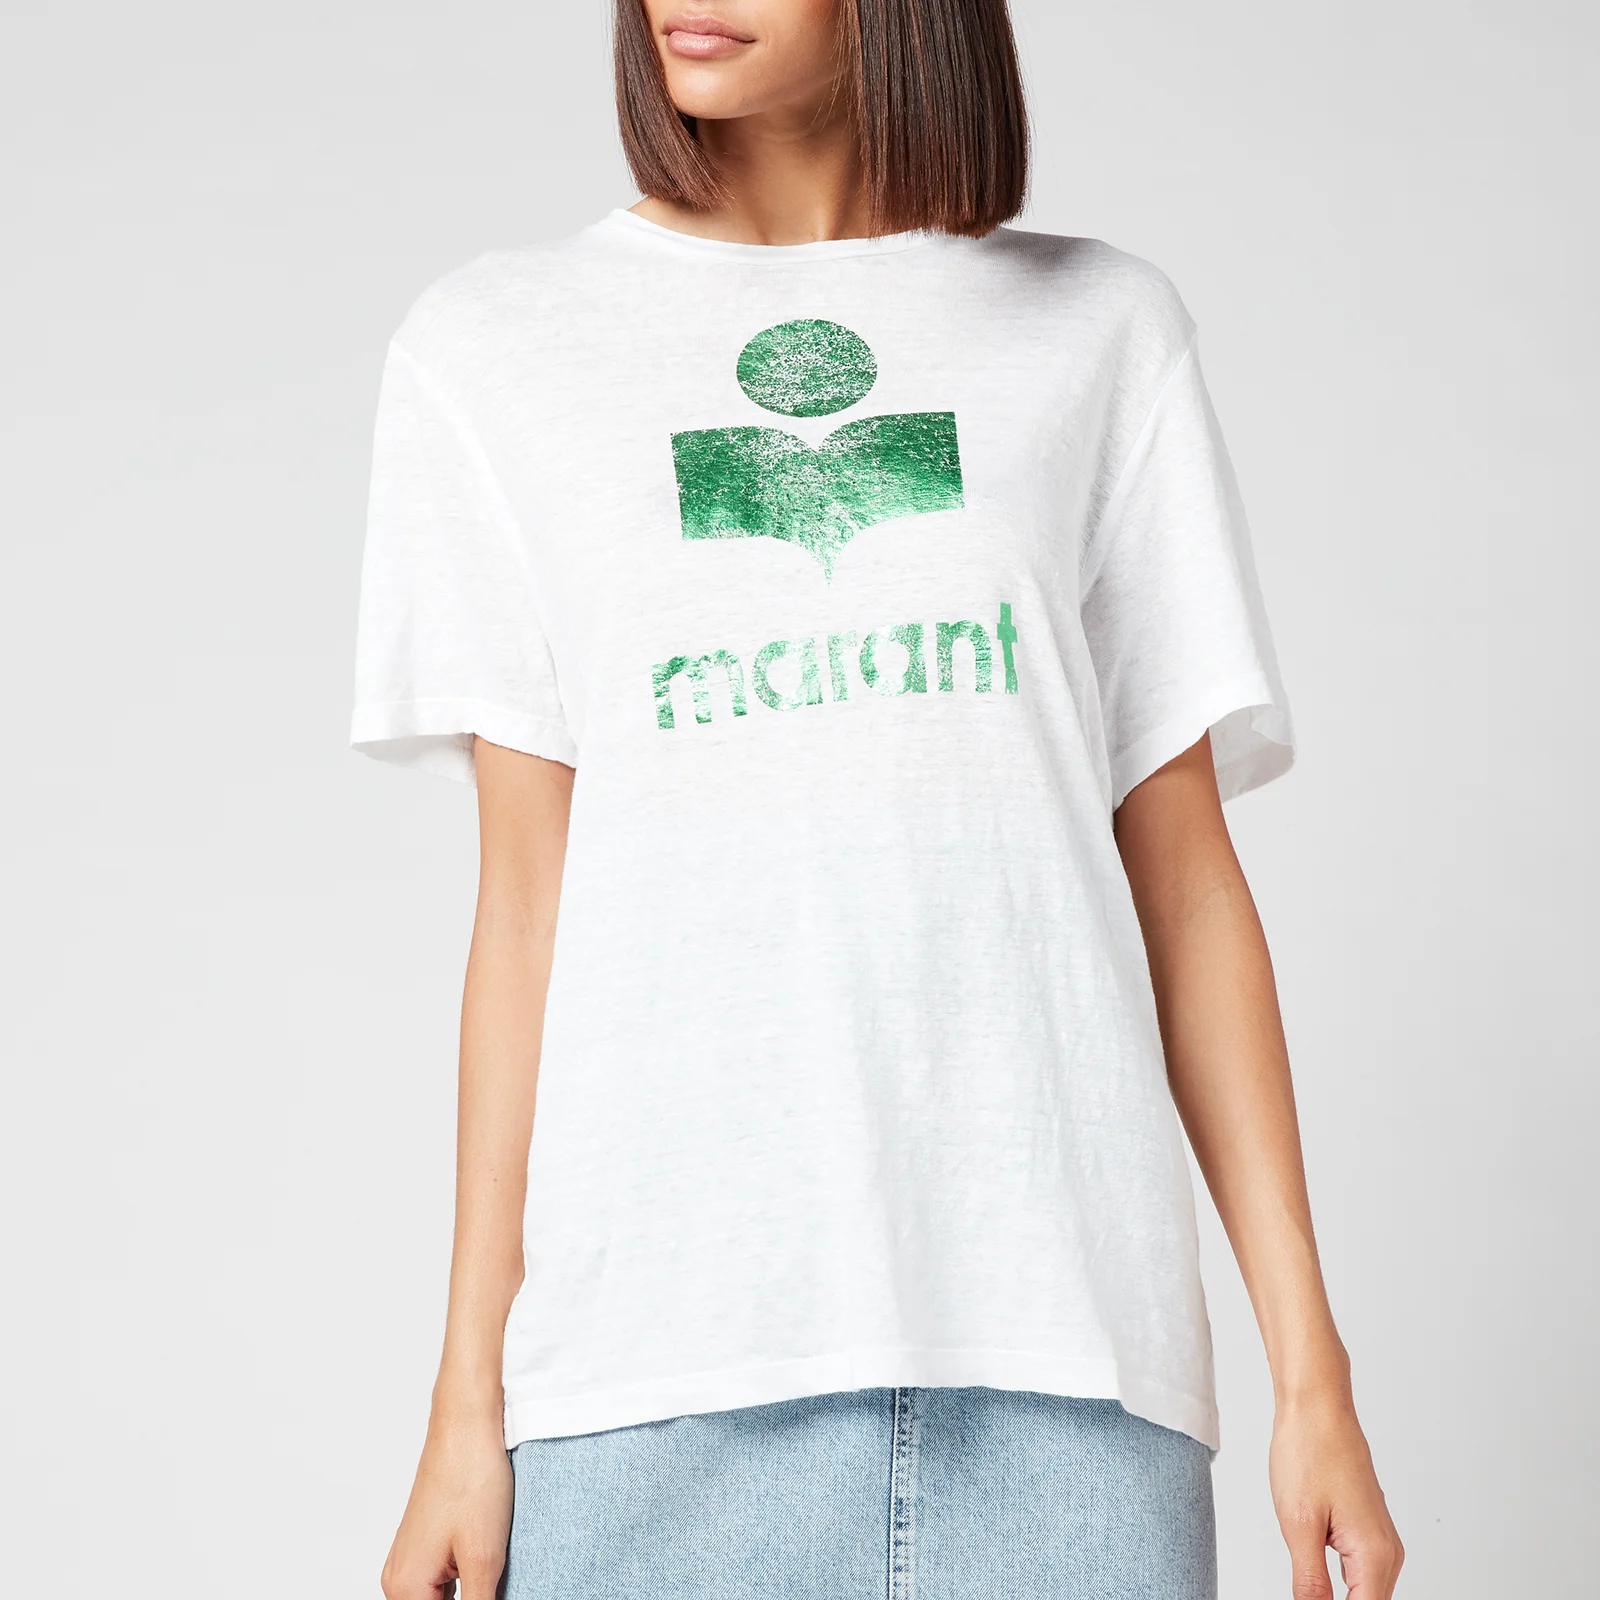 Marant Étoile Women's Zewel T-Shirt - Green/white Image 1